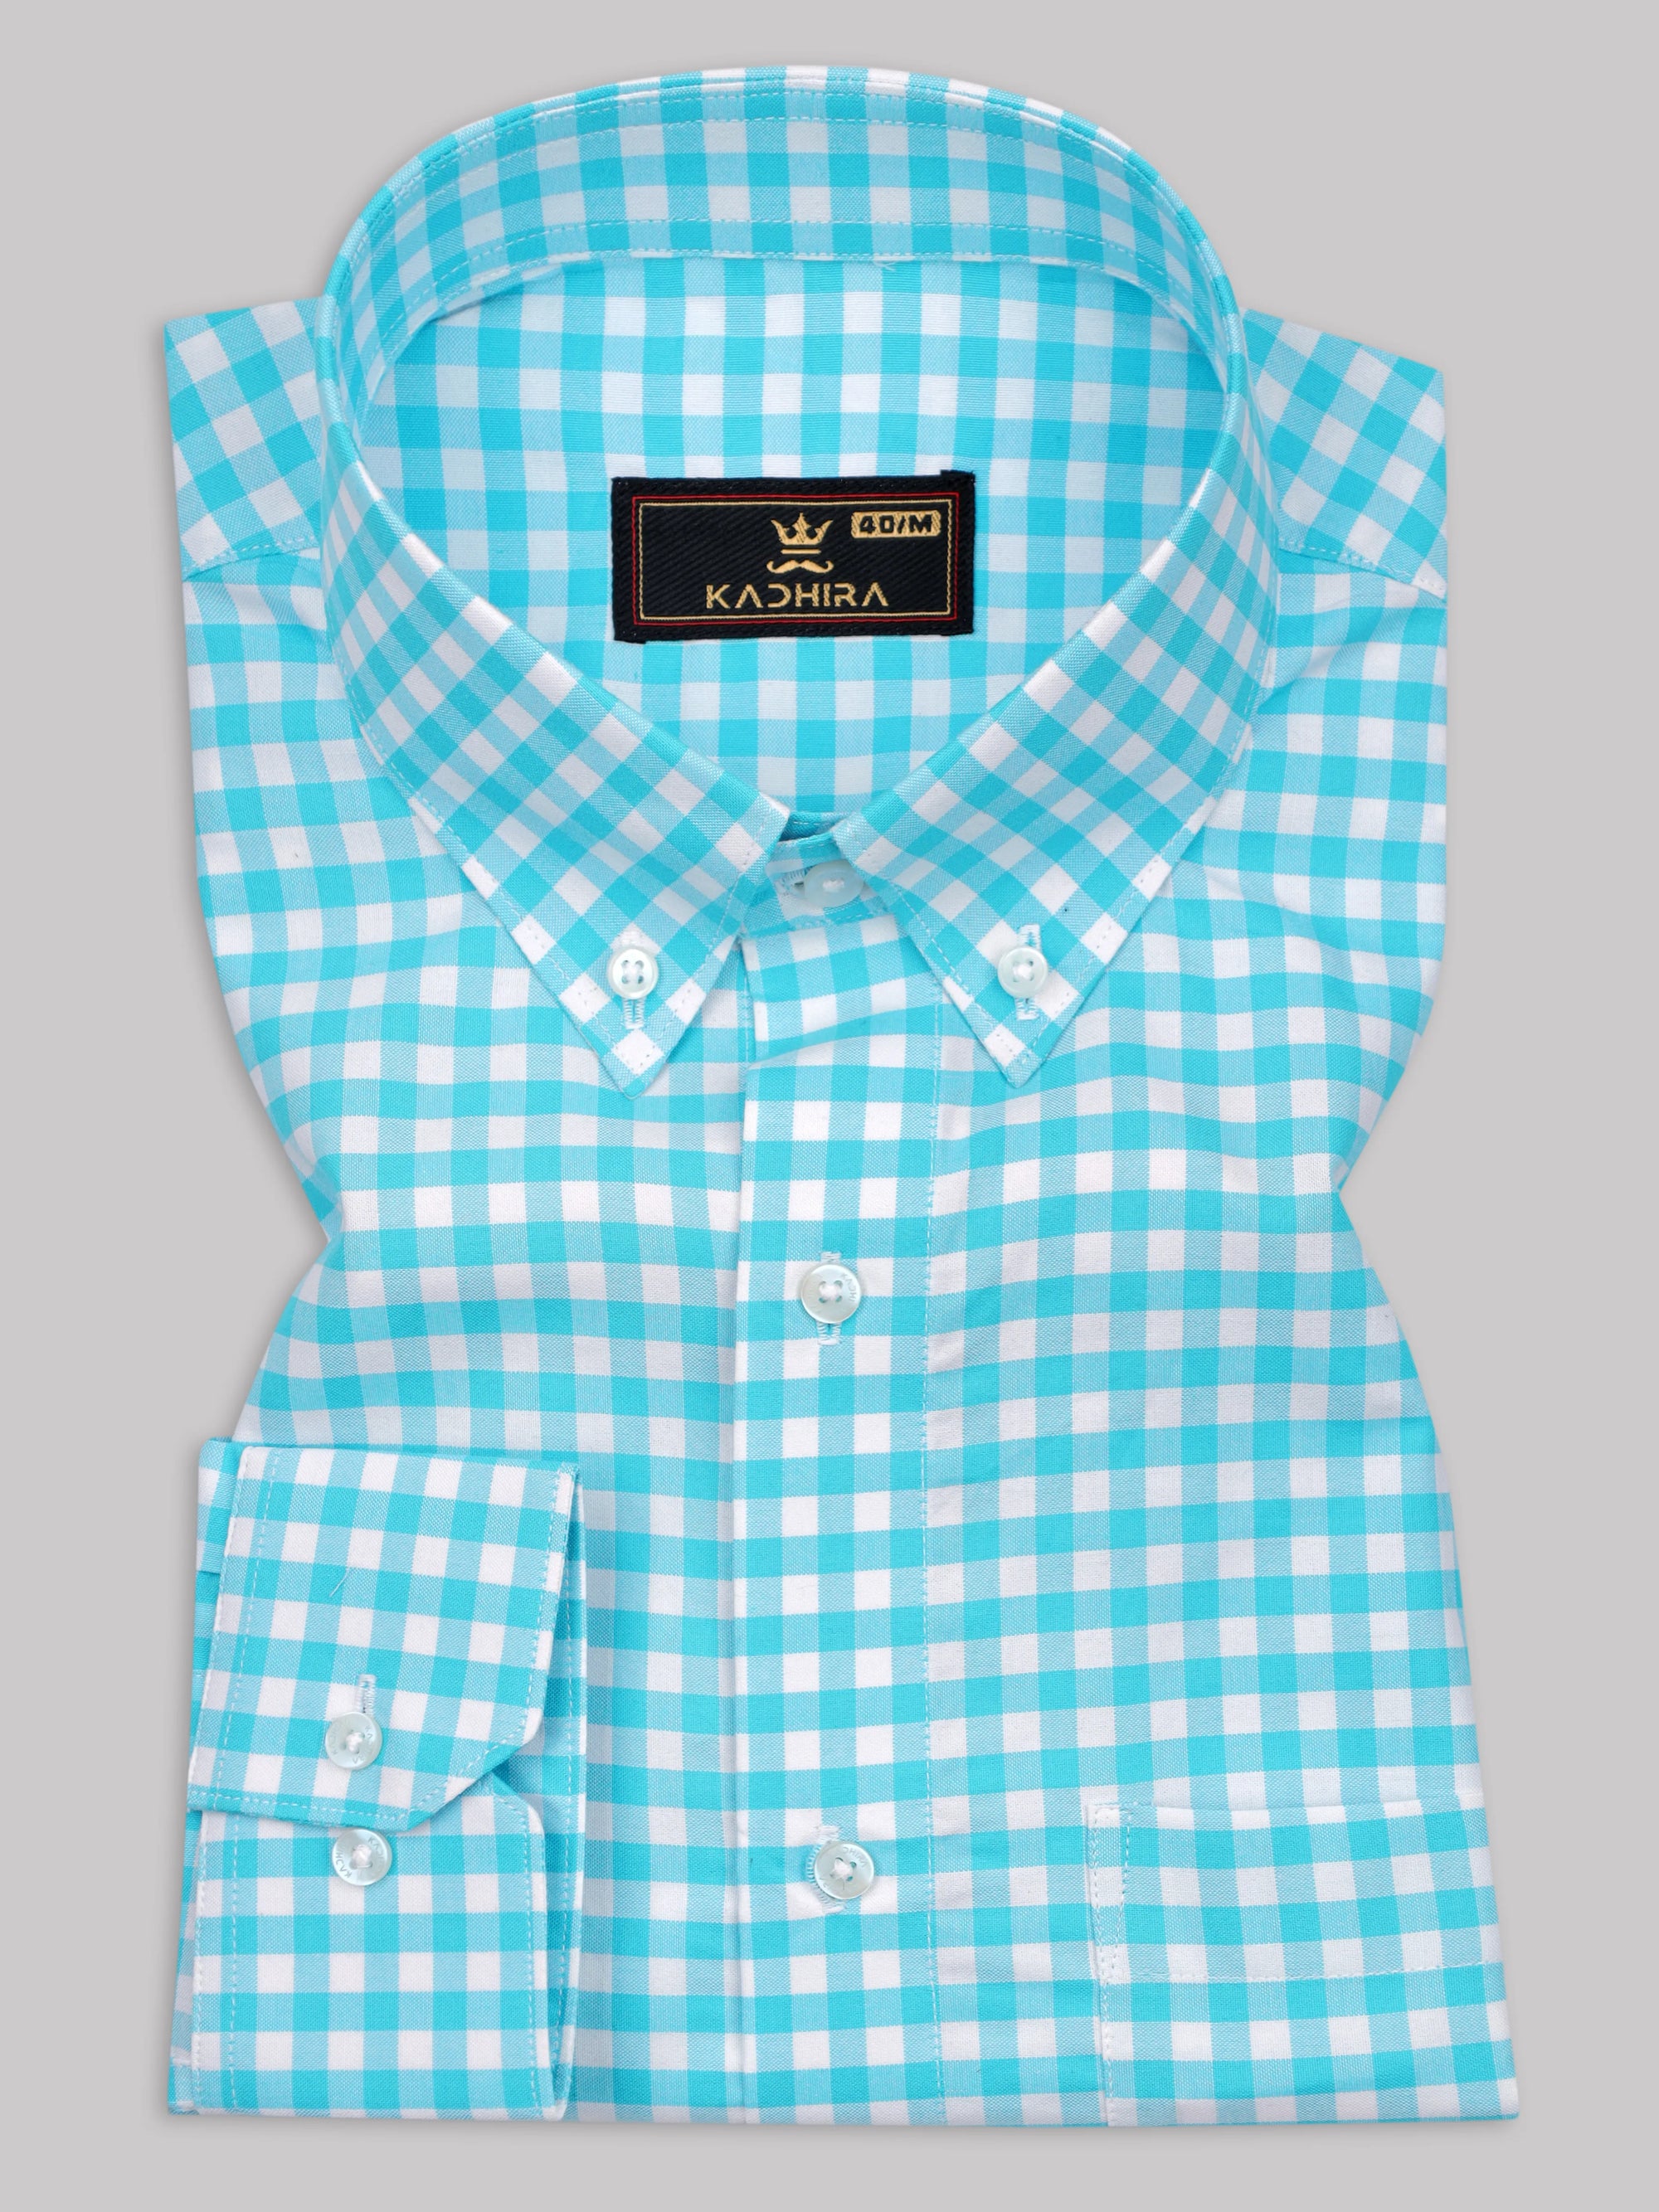 Aqua Blue With White Gingham Check Premium Cotton Shirt